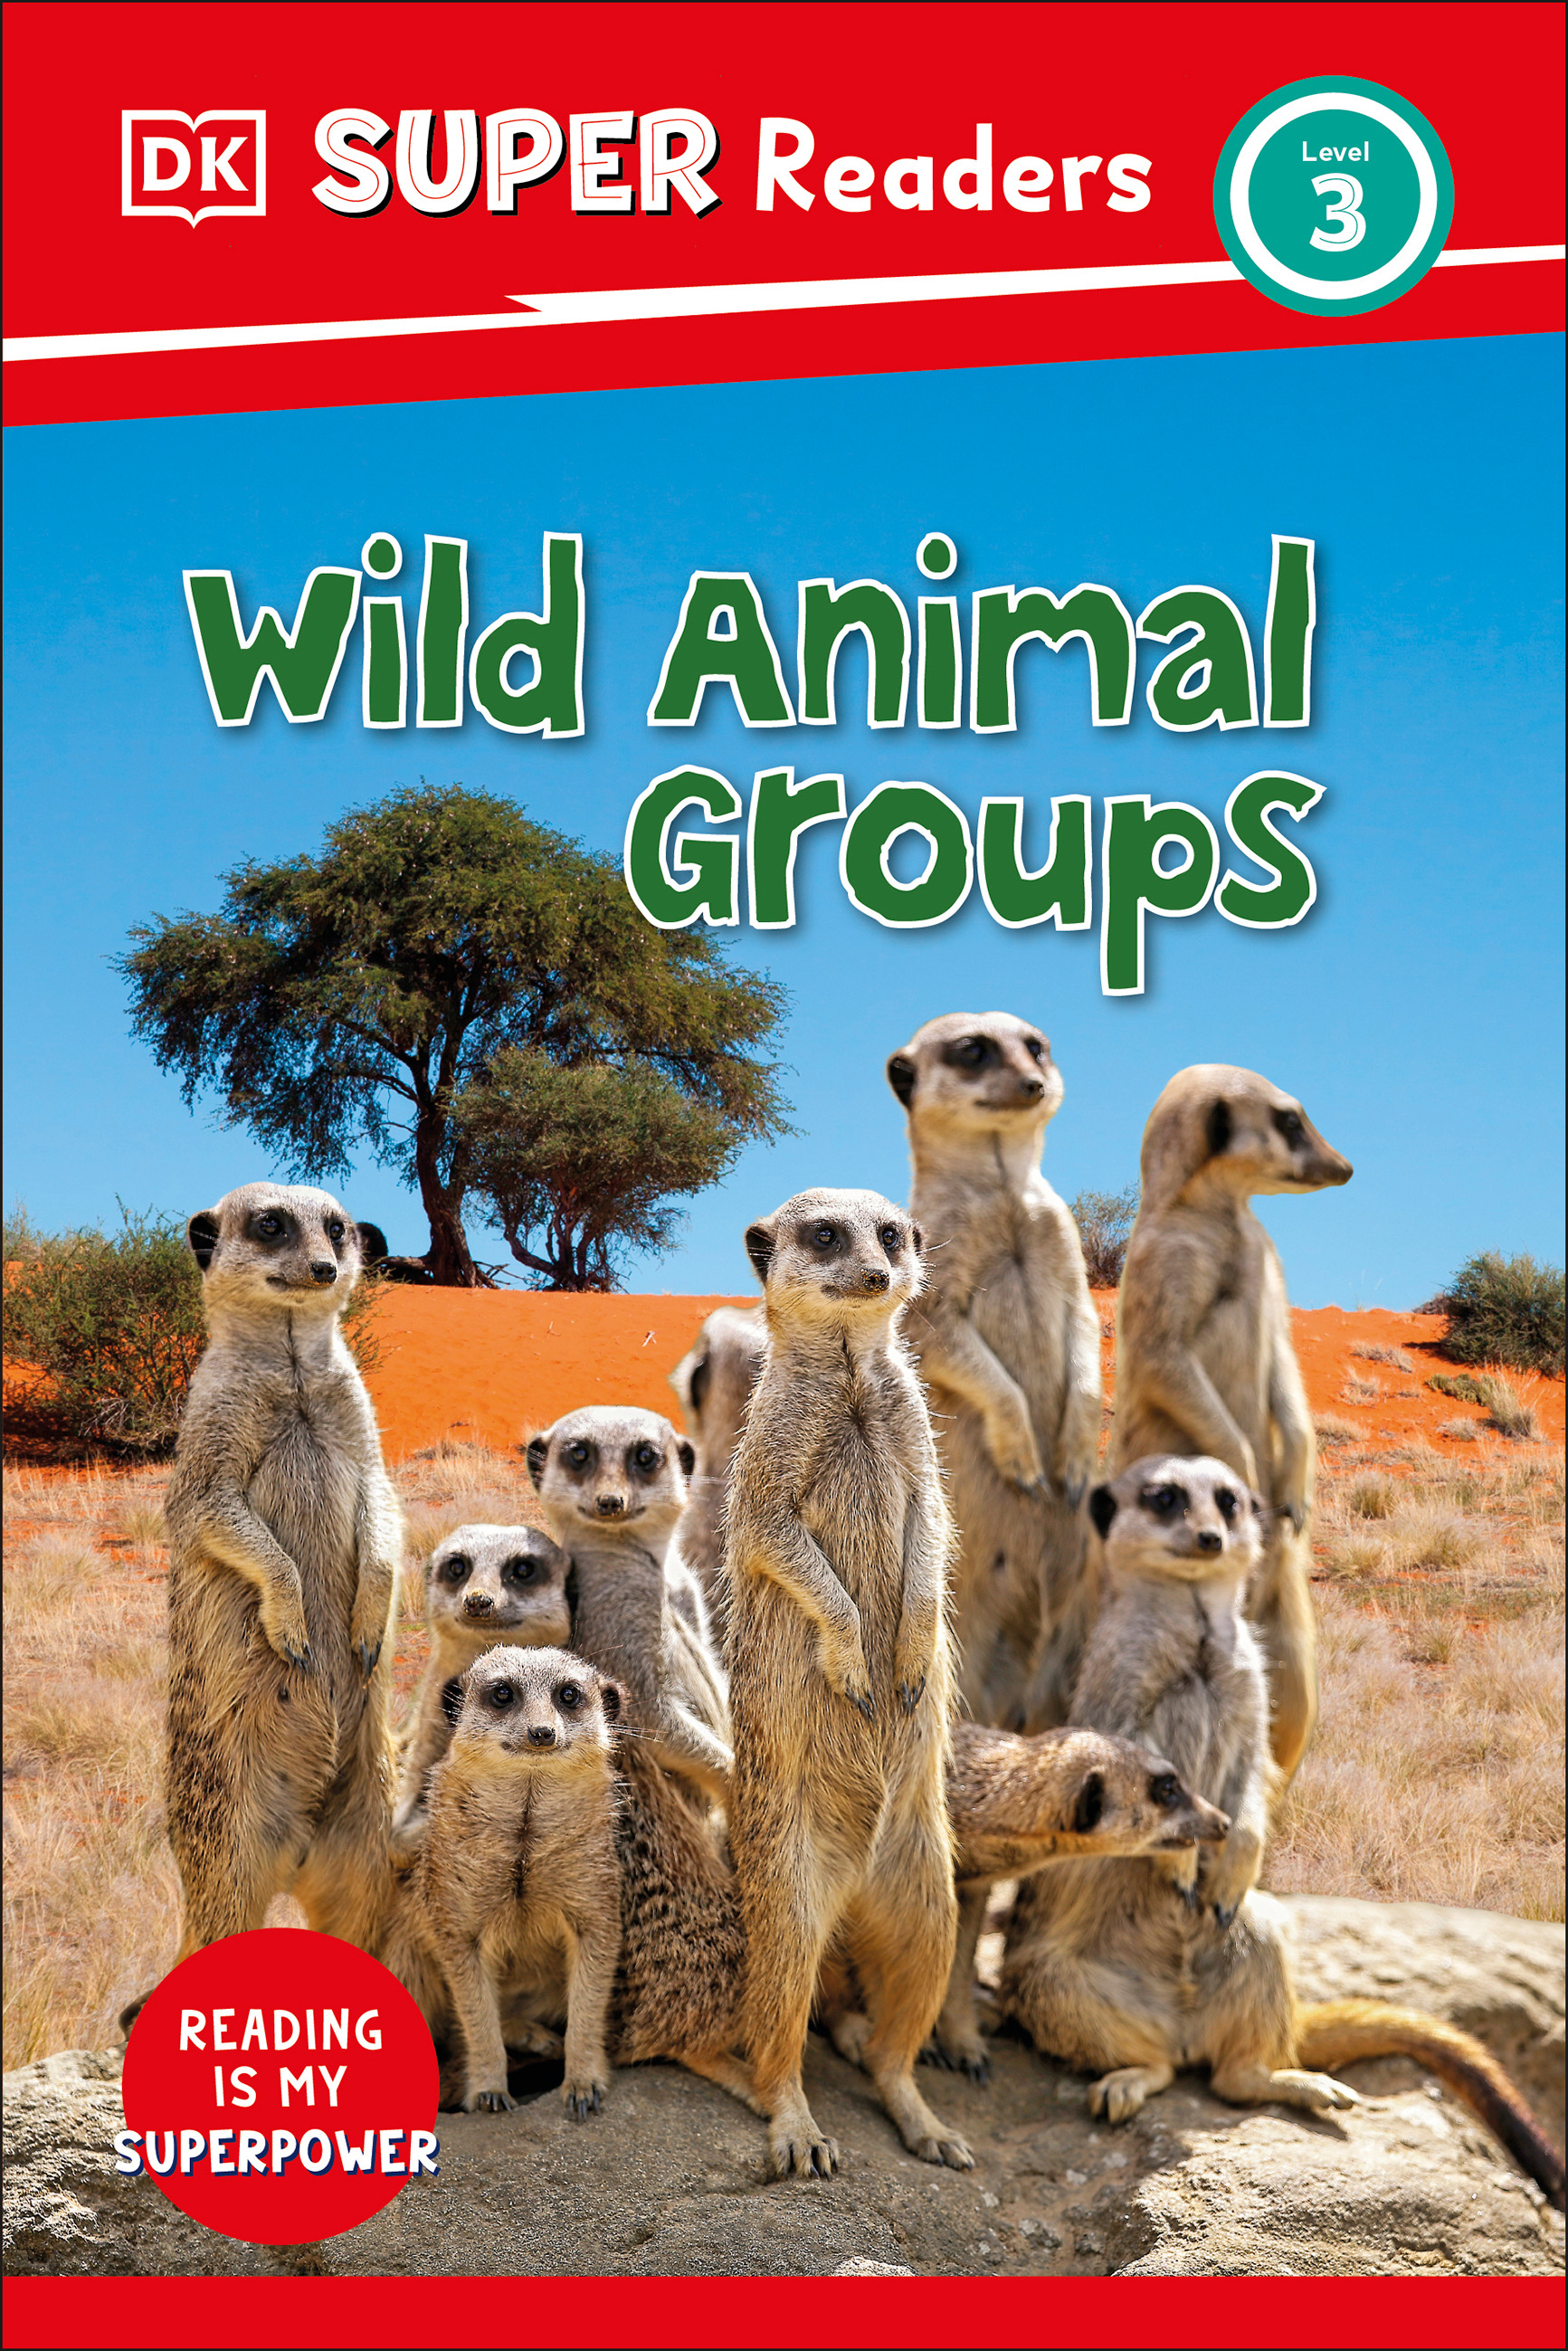 DK Super Readers Level 3 Wild Animal Groups | 